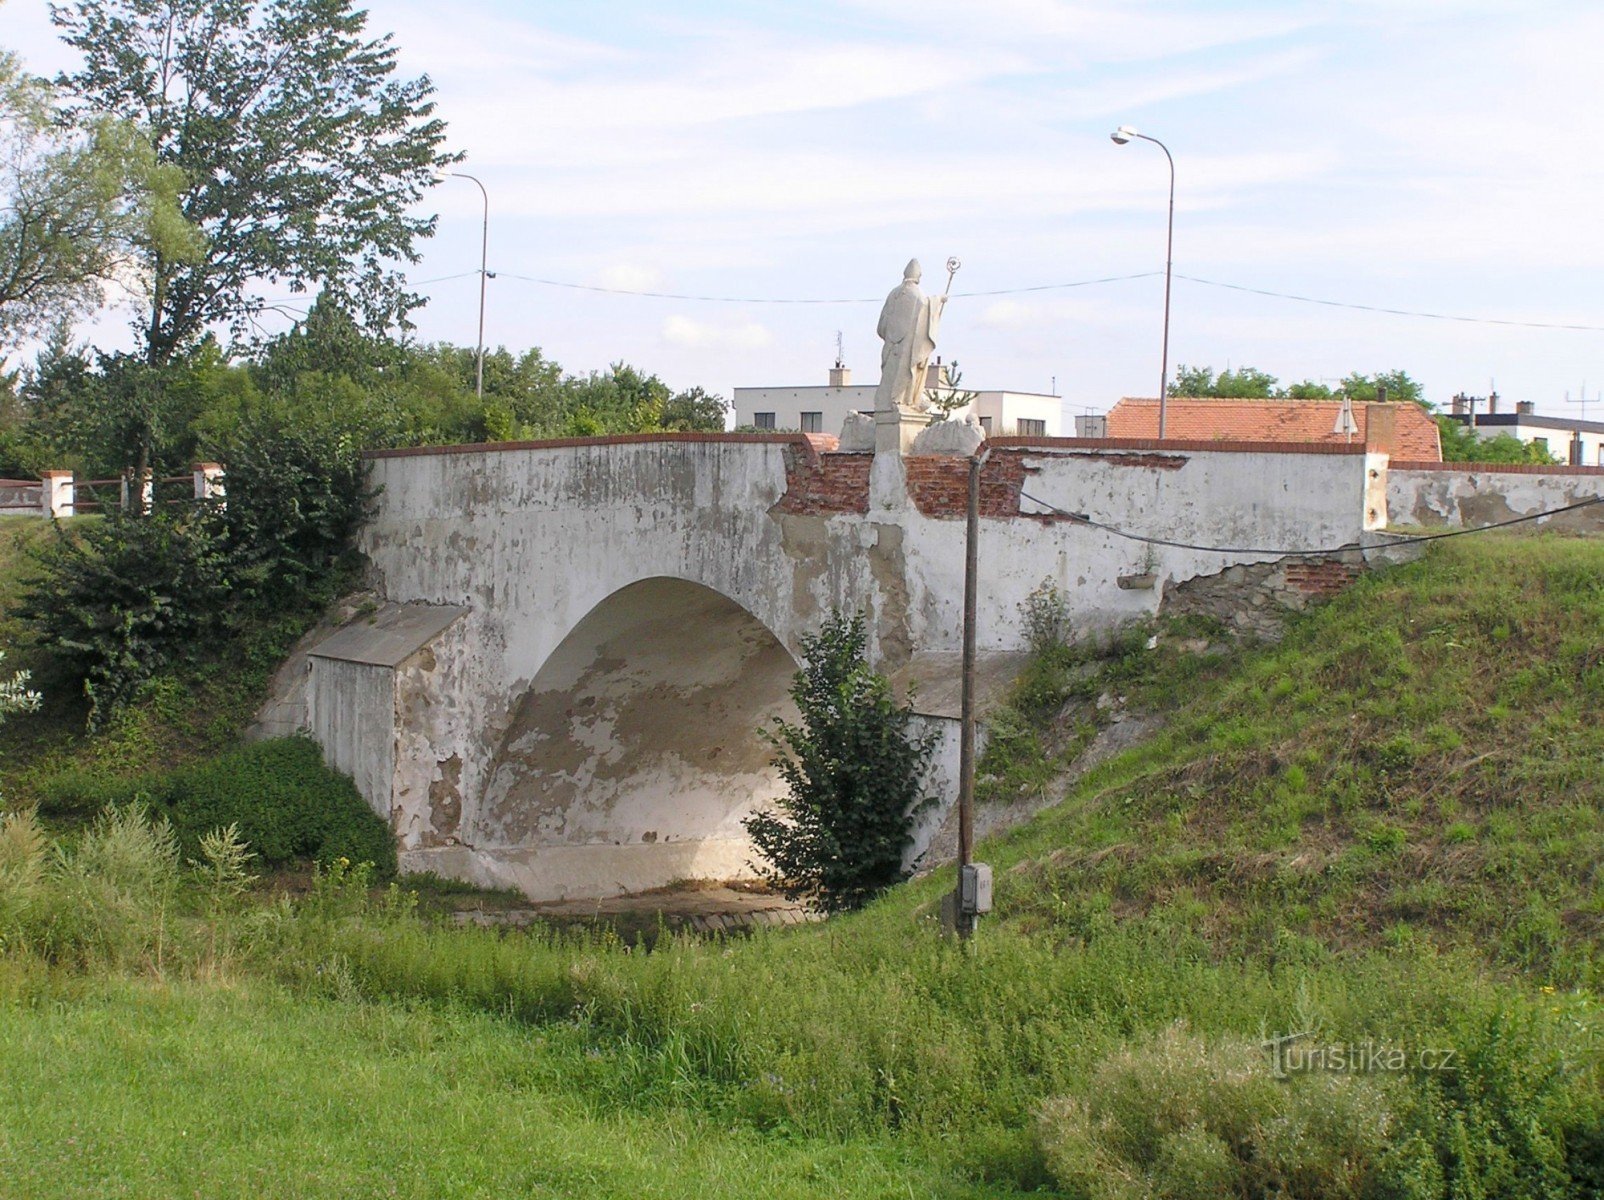 baročni cestni most - severozahodni rob vasi, blizu ceste Znojmo-Moravské Budějovice